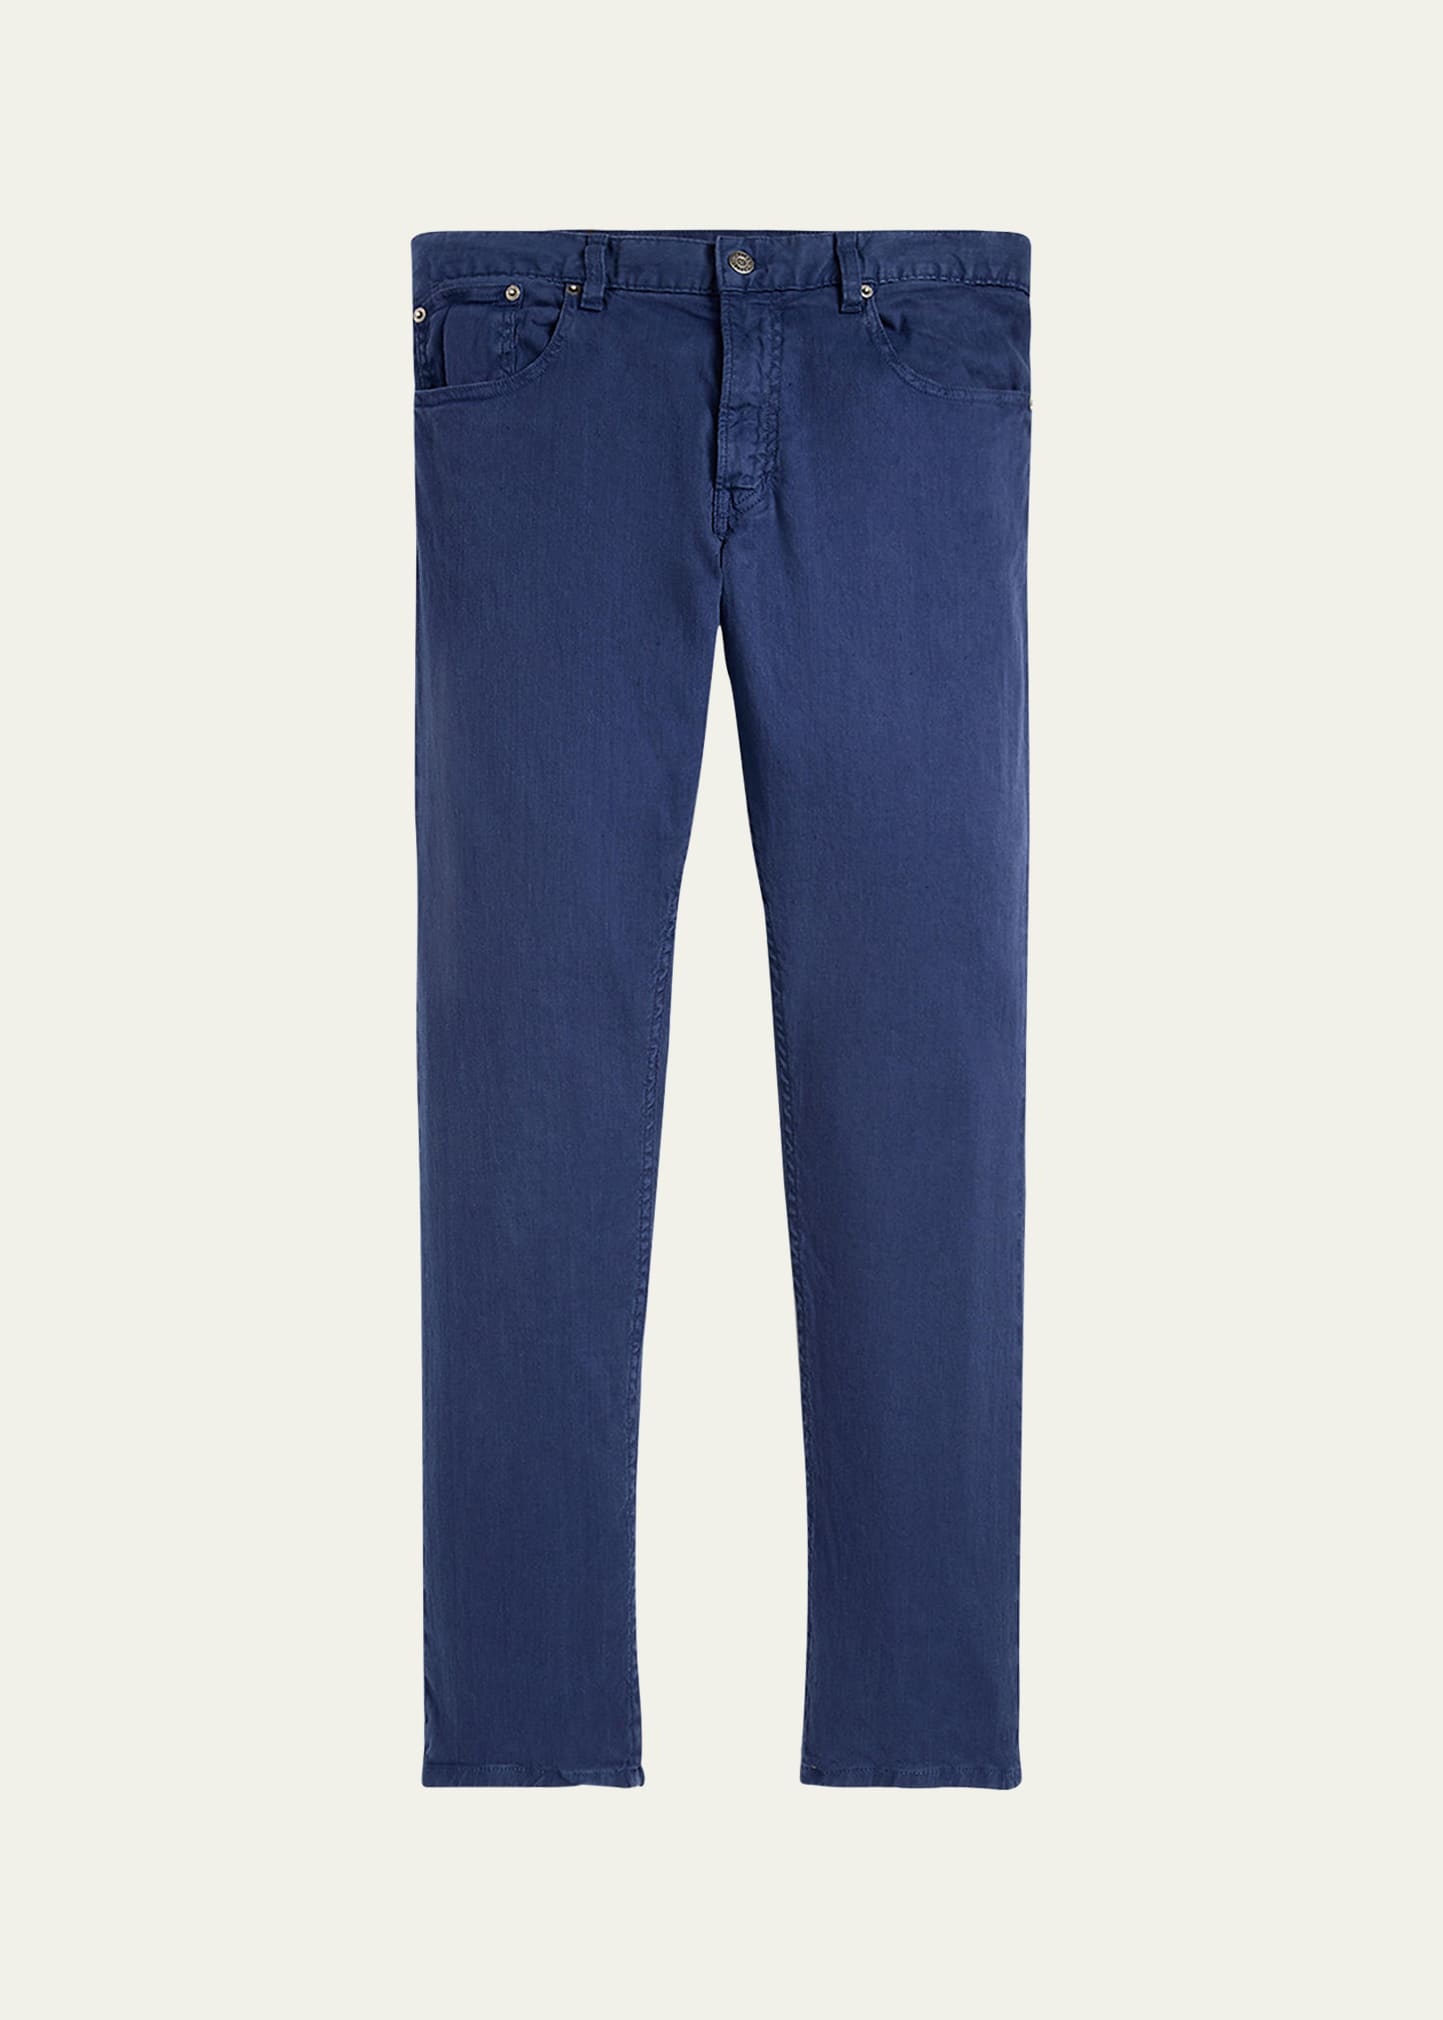 Men's Slim Stretch Linen and Cotton Jeans - 1